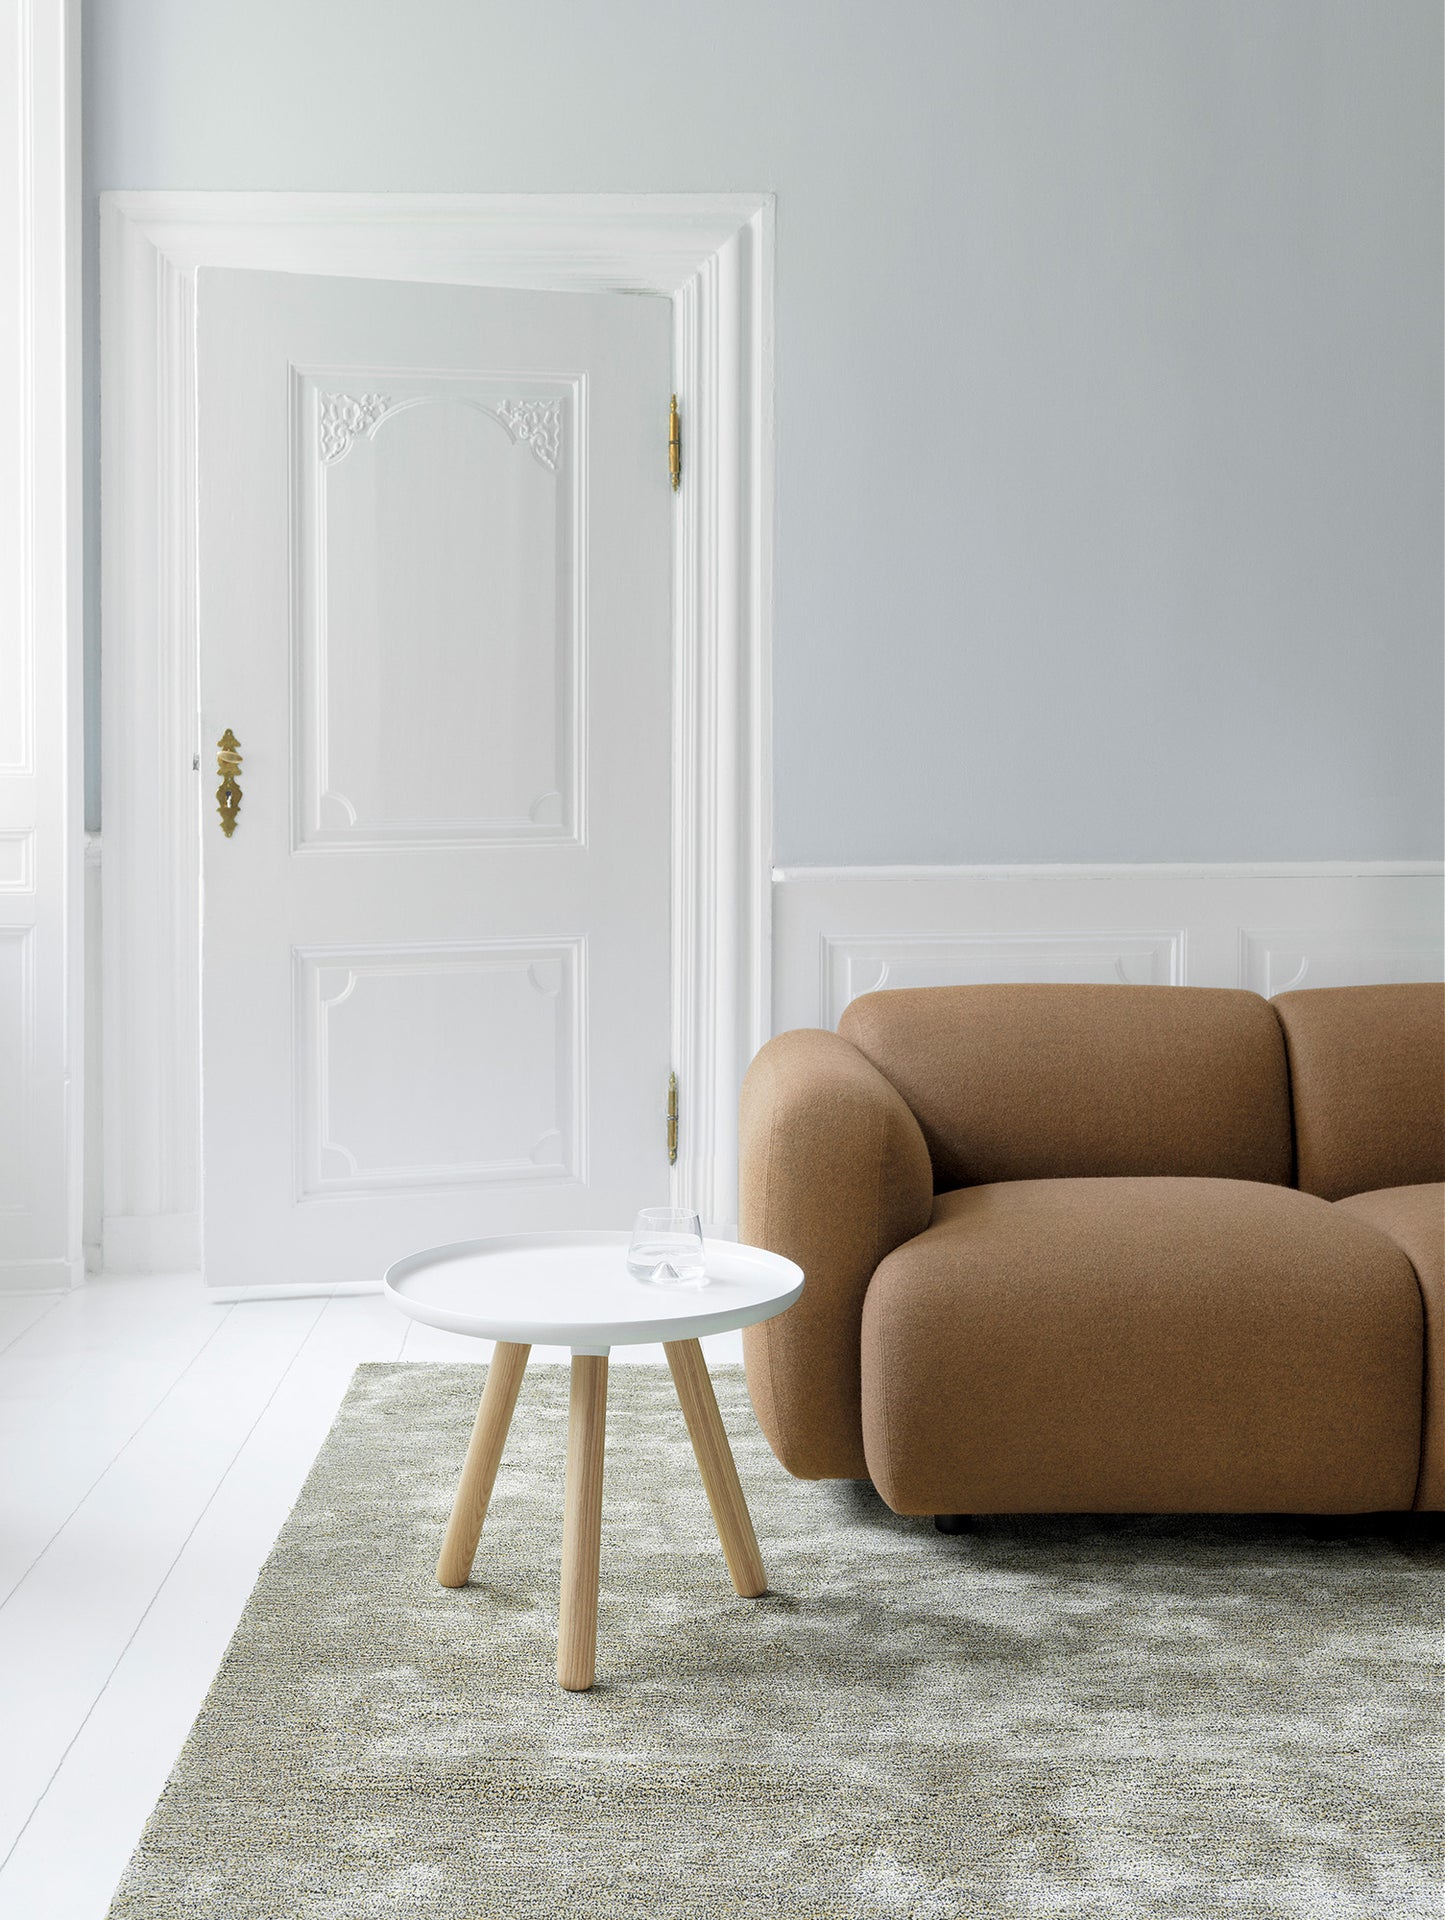 Swell Modular Sofa by Normann Copenhagen / Synergy Linea LDS37